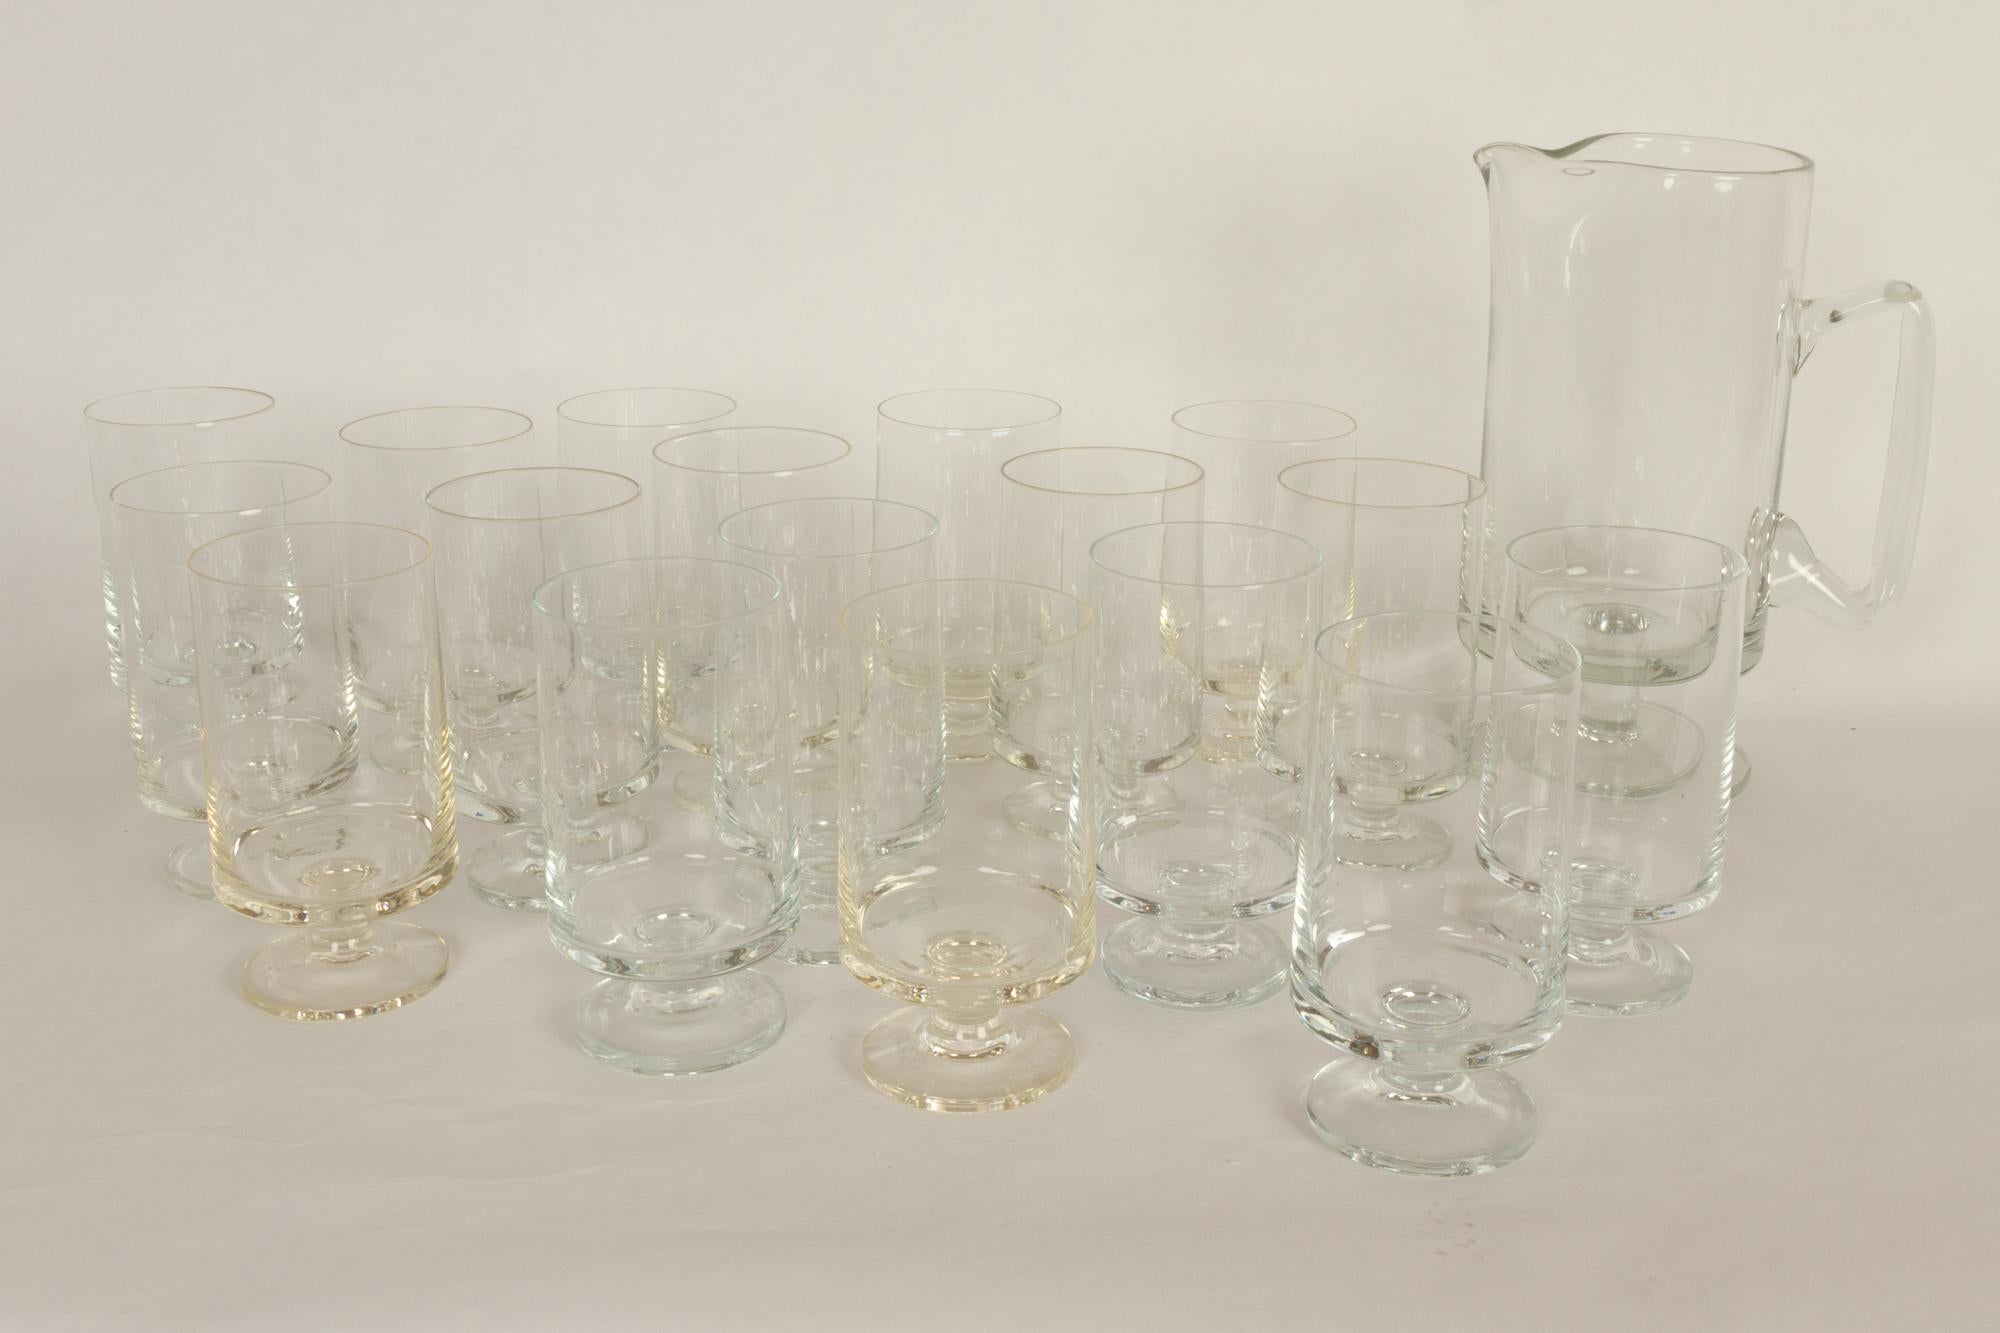 Vintage Danish Stub glasses by Kastrup-Holmegaard, 1950s
This vintage set is designed by Danish artists Grethe Meyer and Ibi Trier Mørch for Kastrup Glassworks in 1958. Kastrup Glassworks was later purchased by Holmegaard who continued the